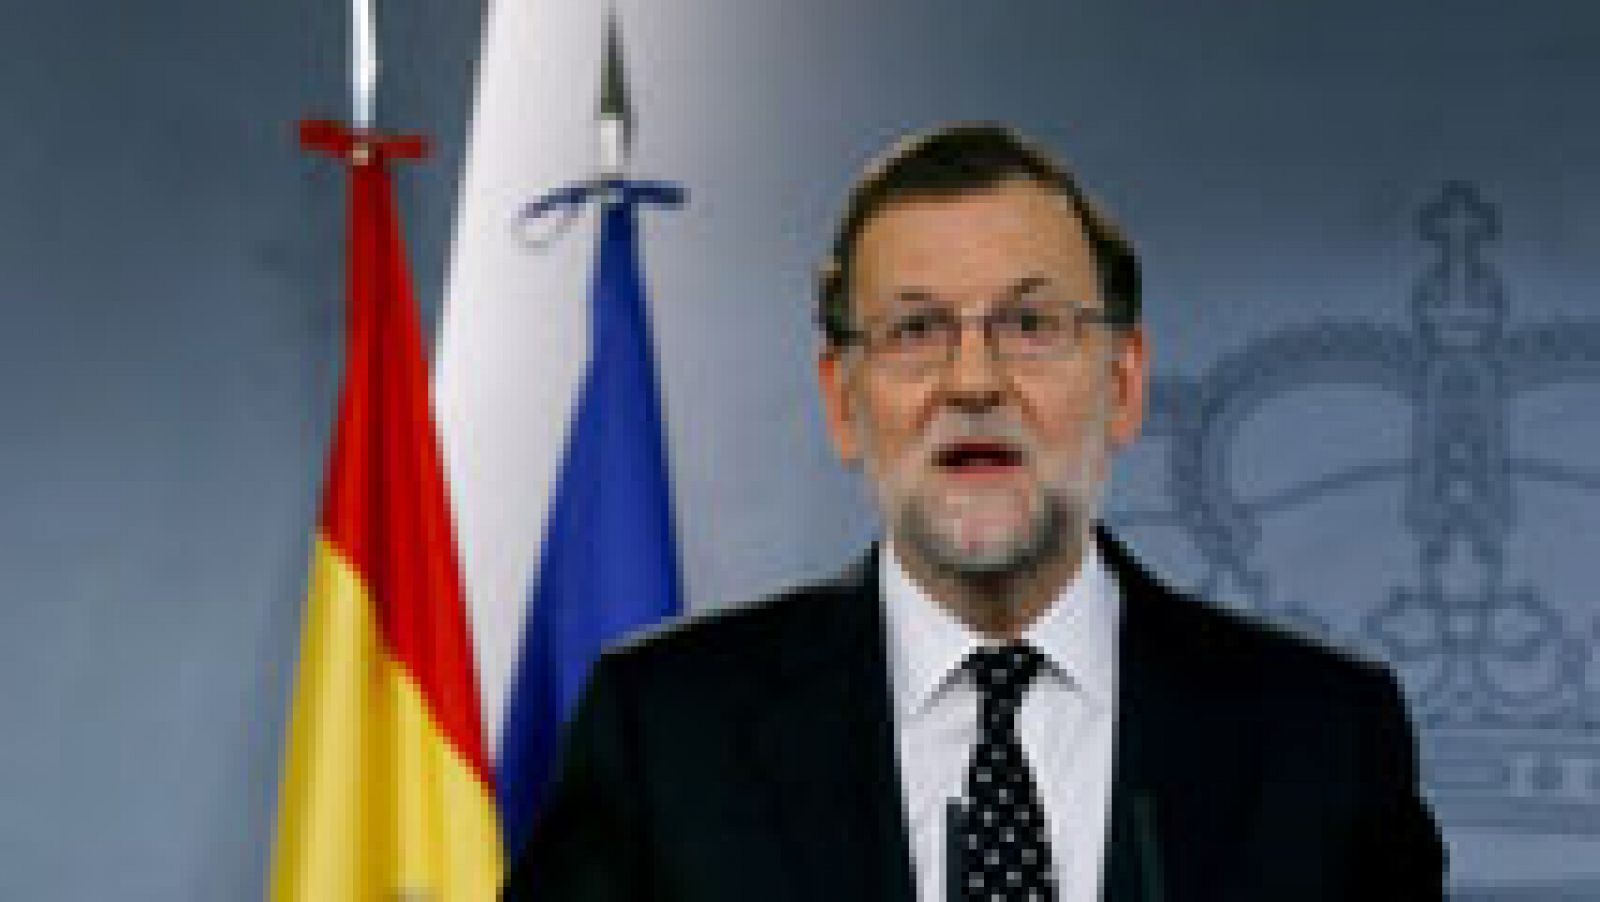 Telediario 1: Rajoy rechaza "de momento" someterse a la investidura | RTVE Play